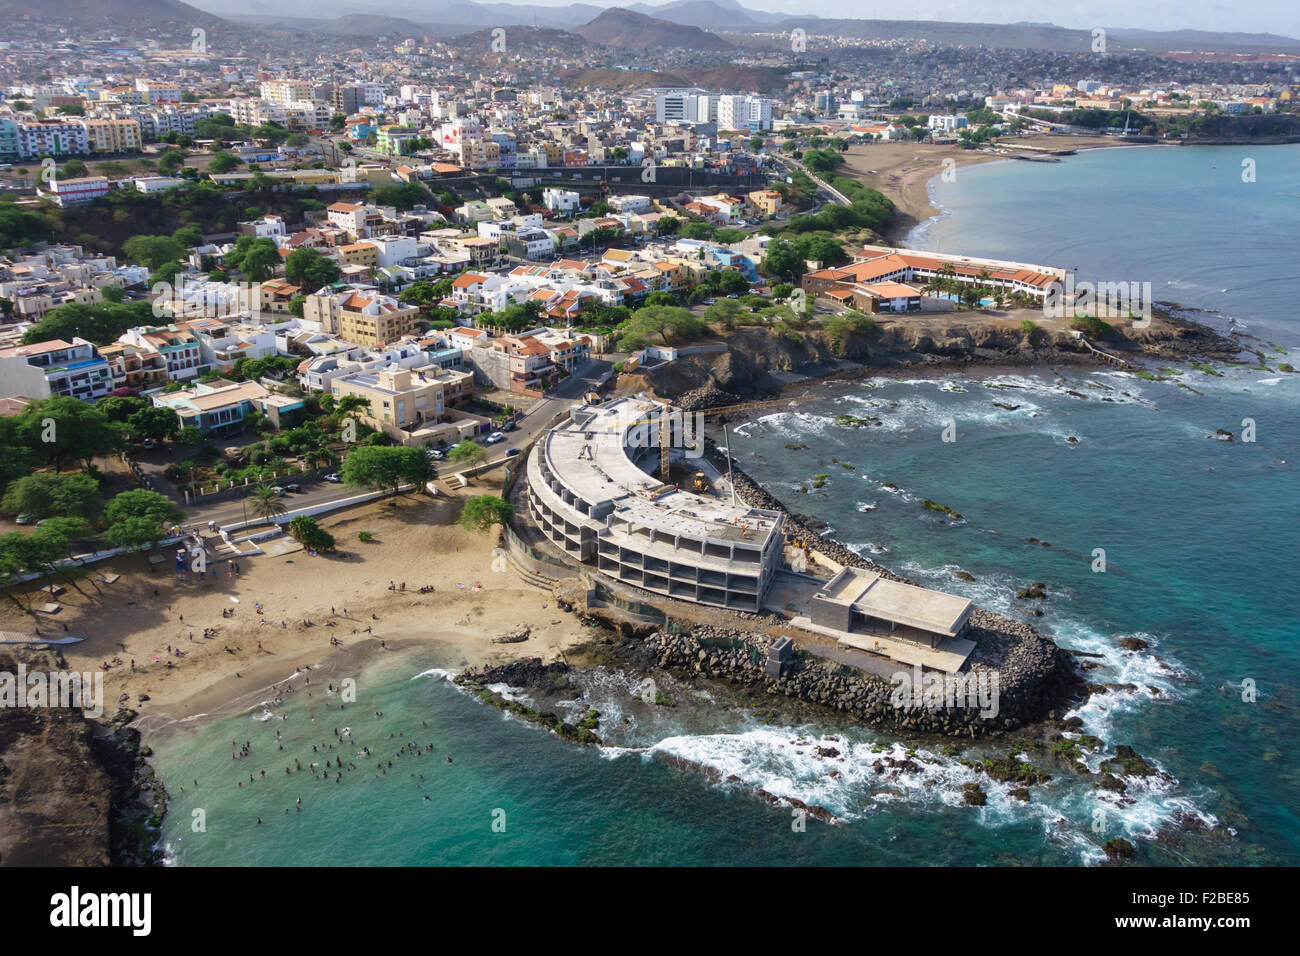 Aerial view of Praia city in Santiago - Capital of Cape Verde Islands - Cabo  Verde Stock Photo - Alamy